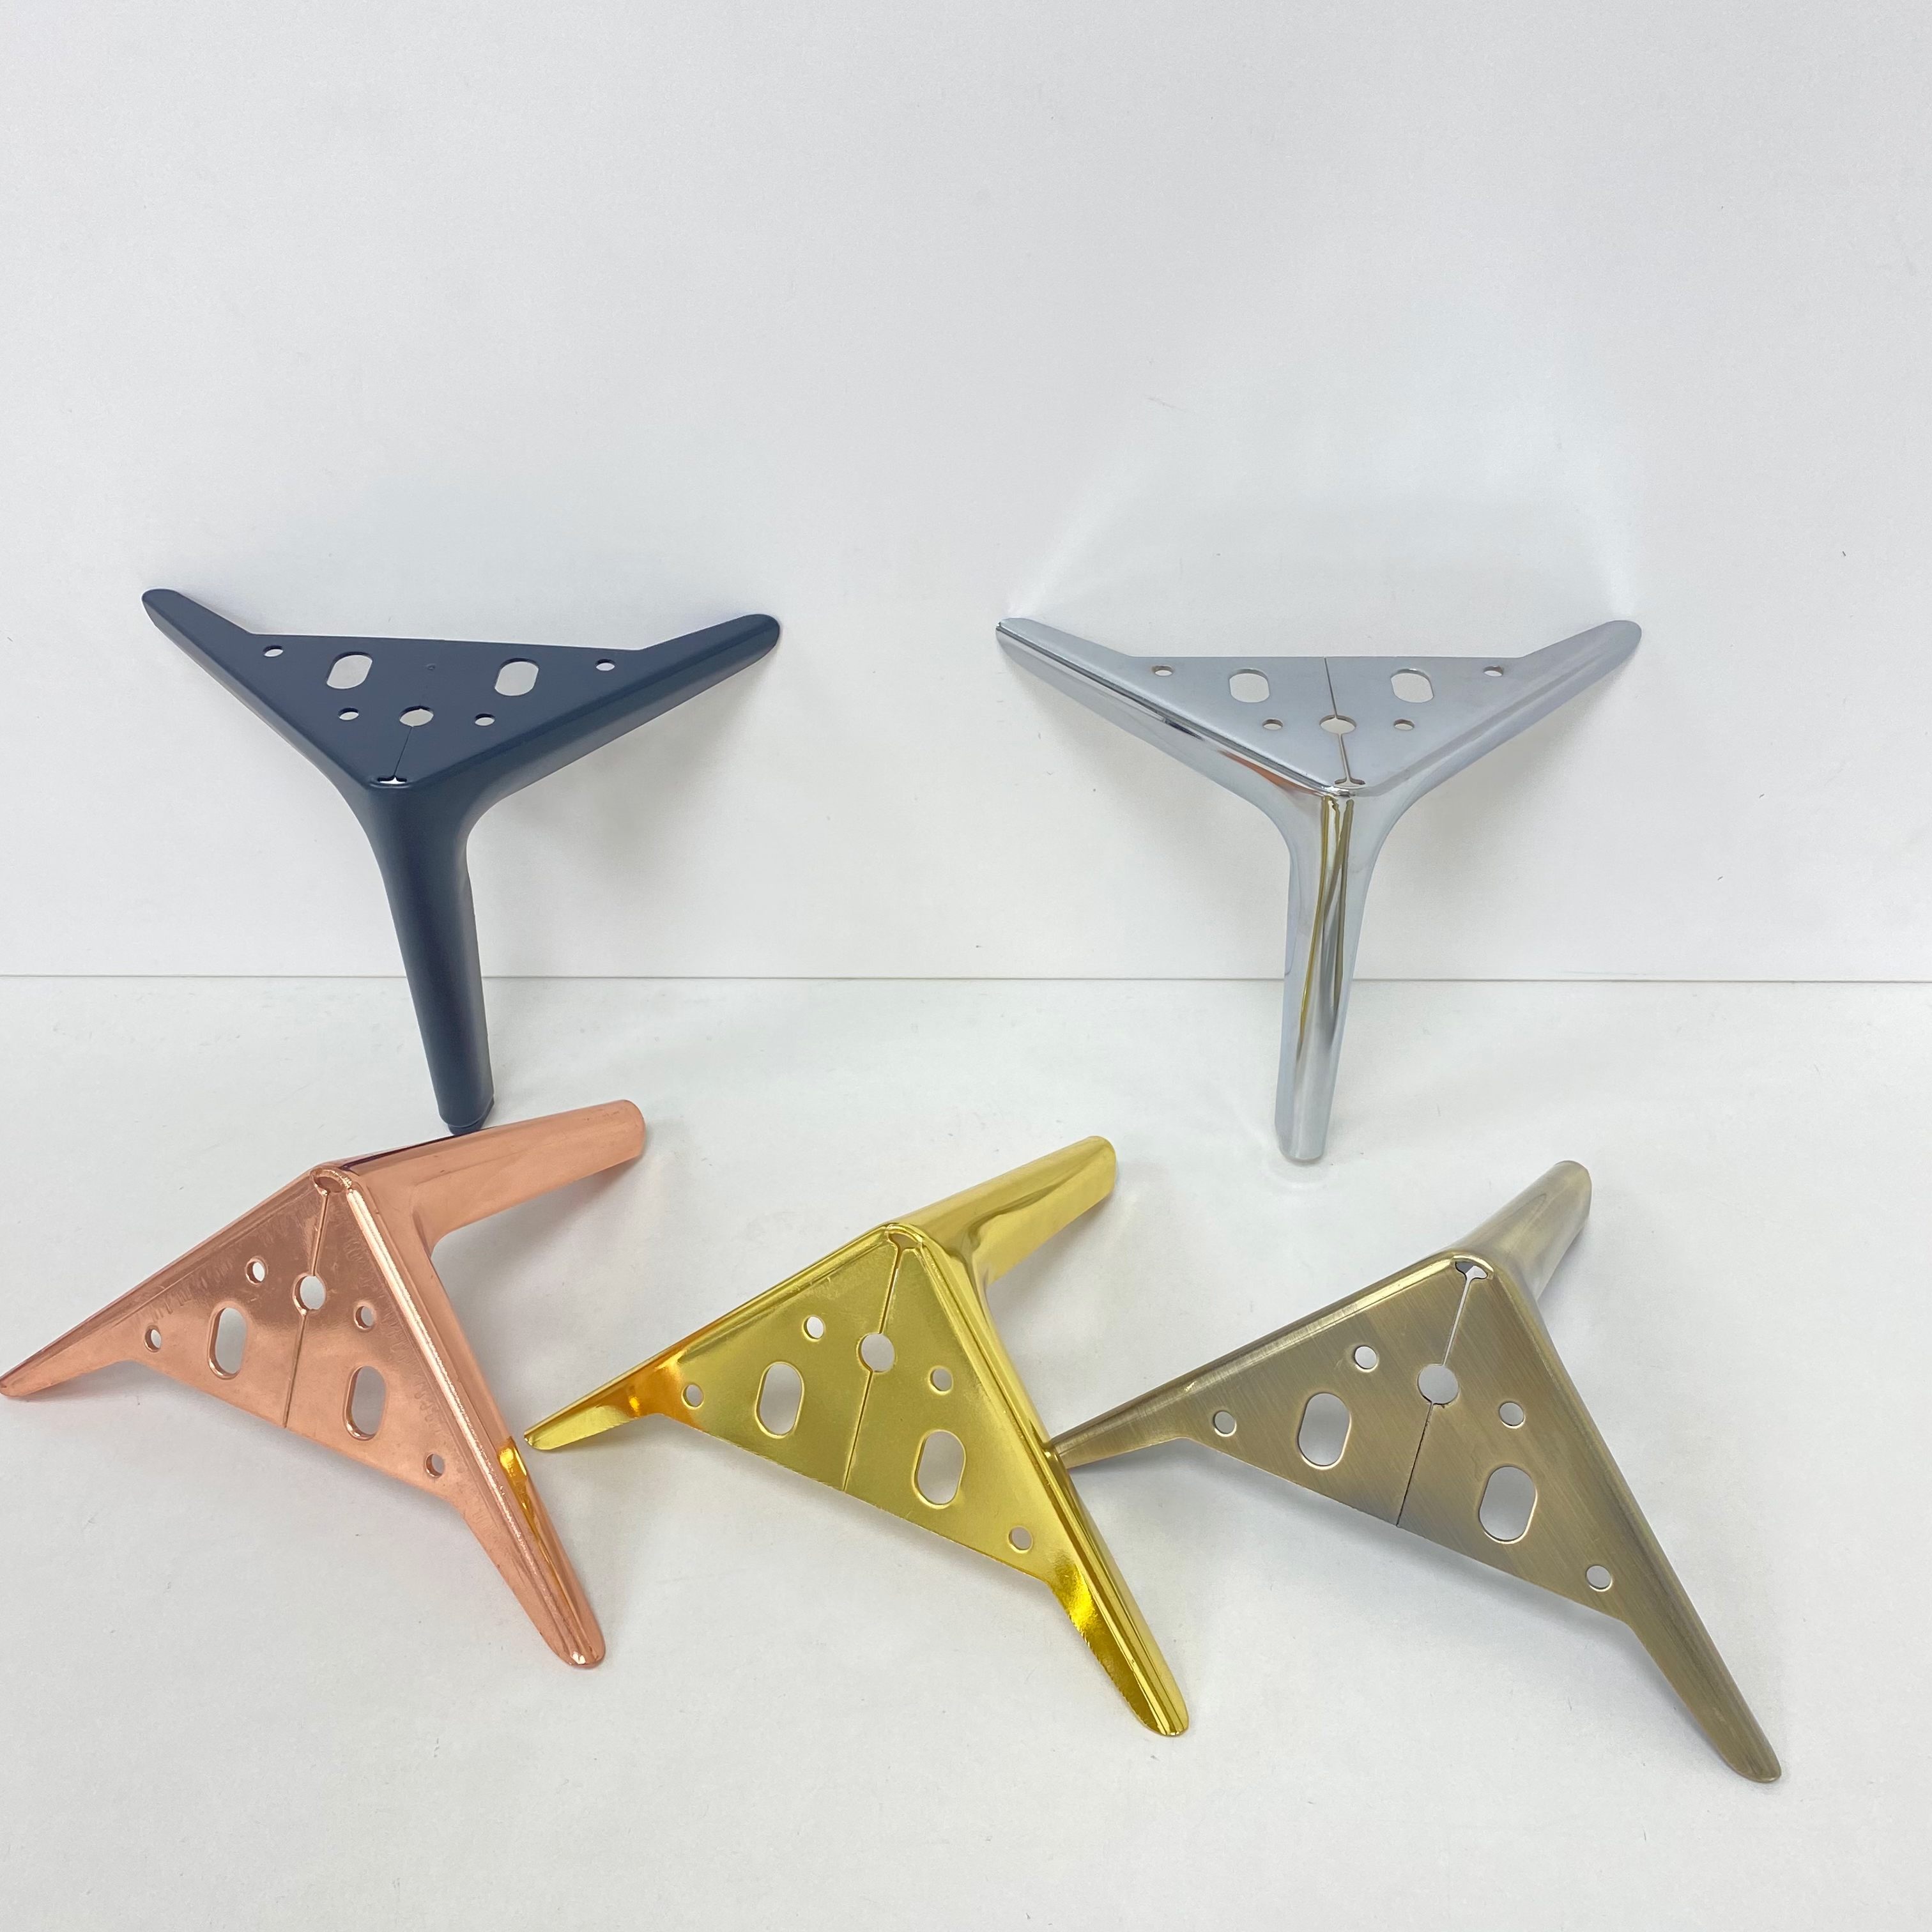 Pies de placa superior triangular de hardware resistente para sofá, sofá, tocador, banco, gabinete